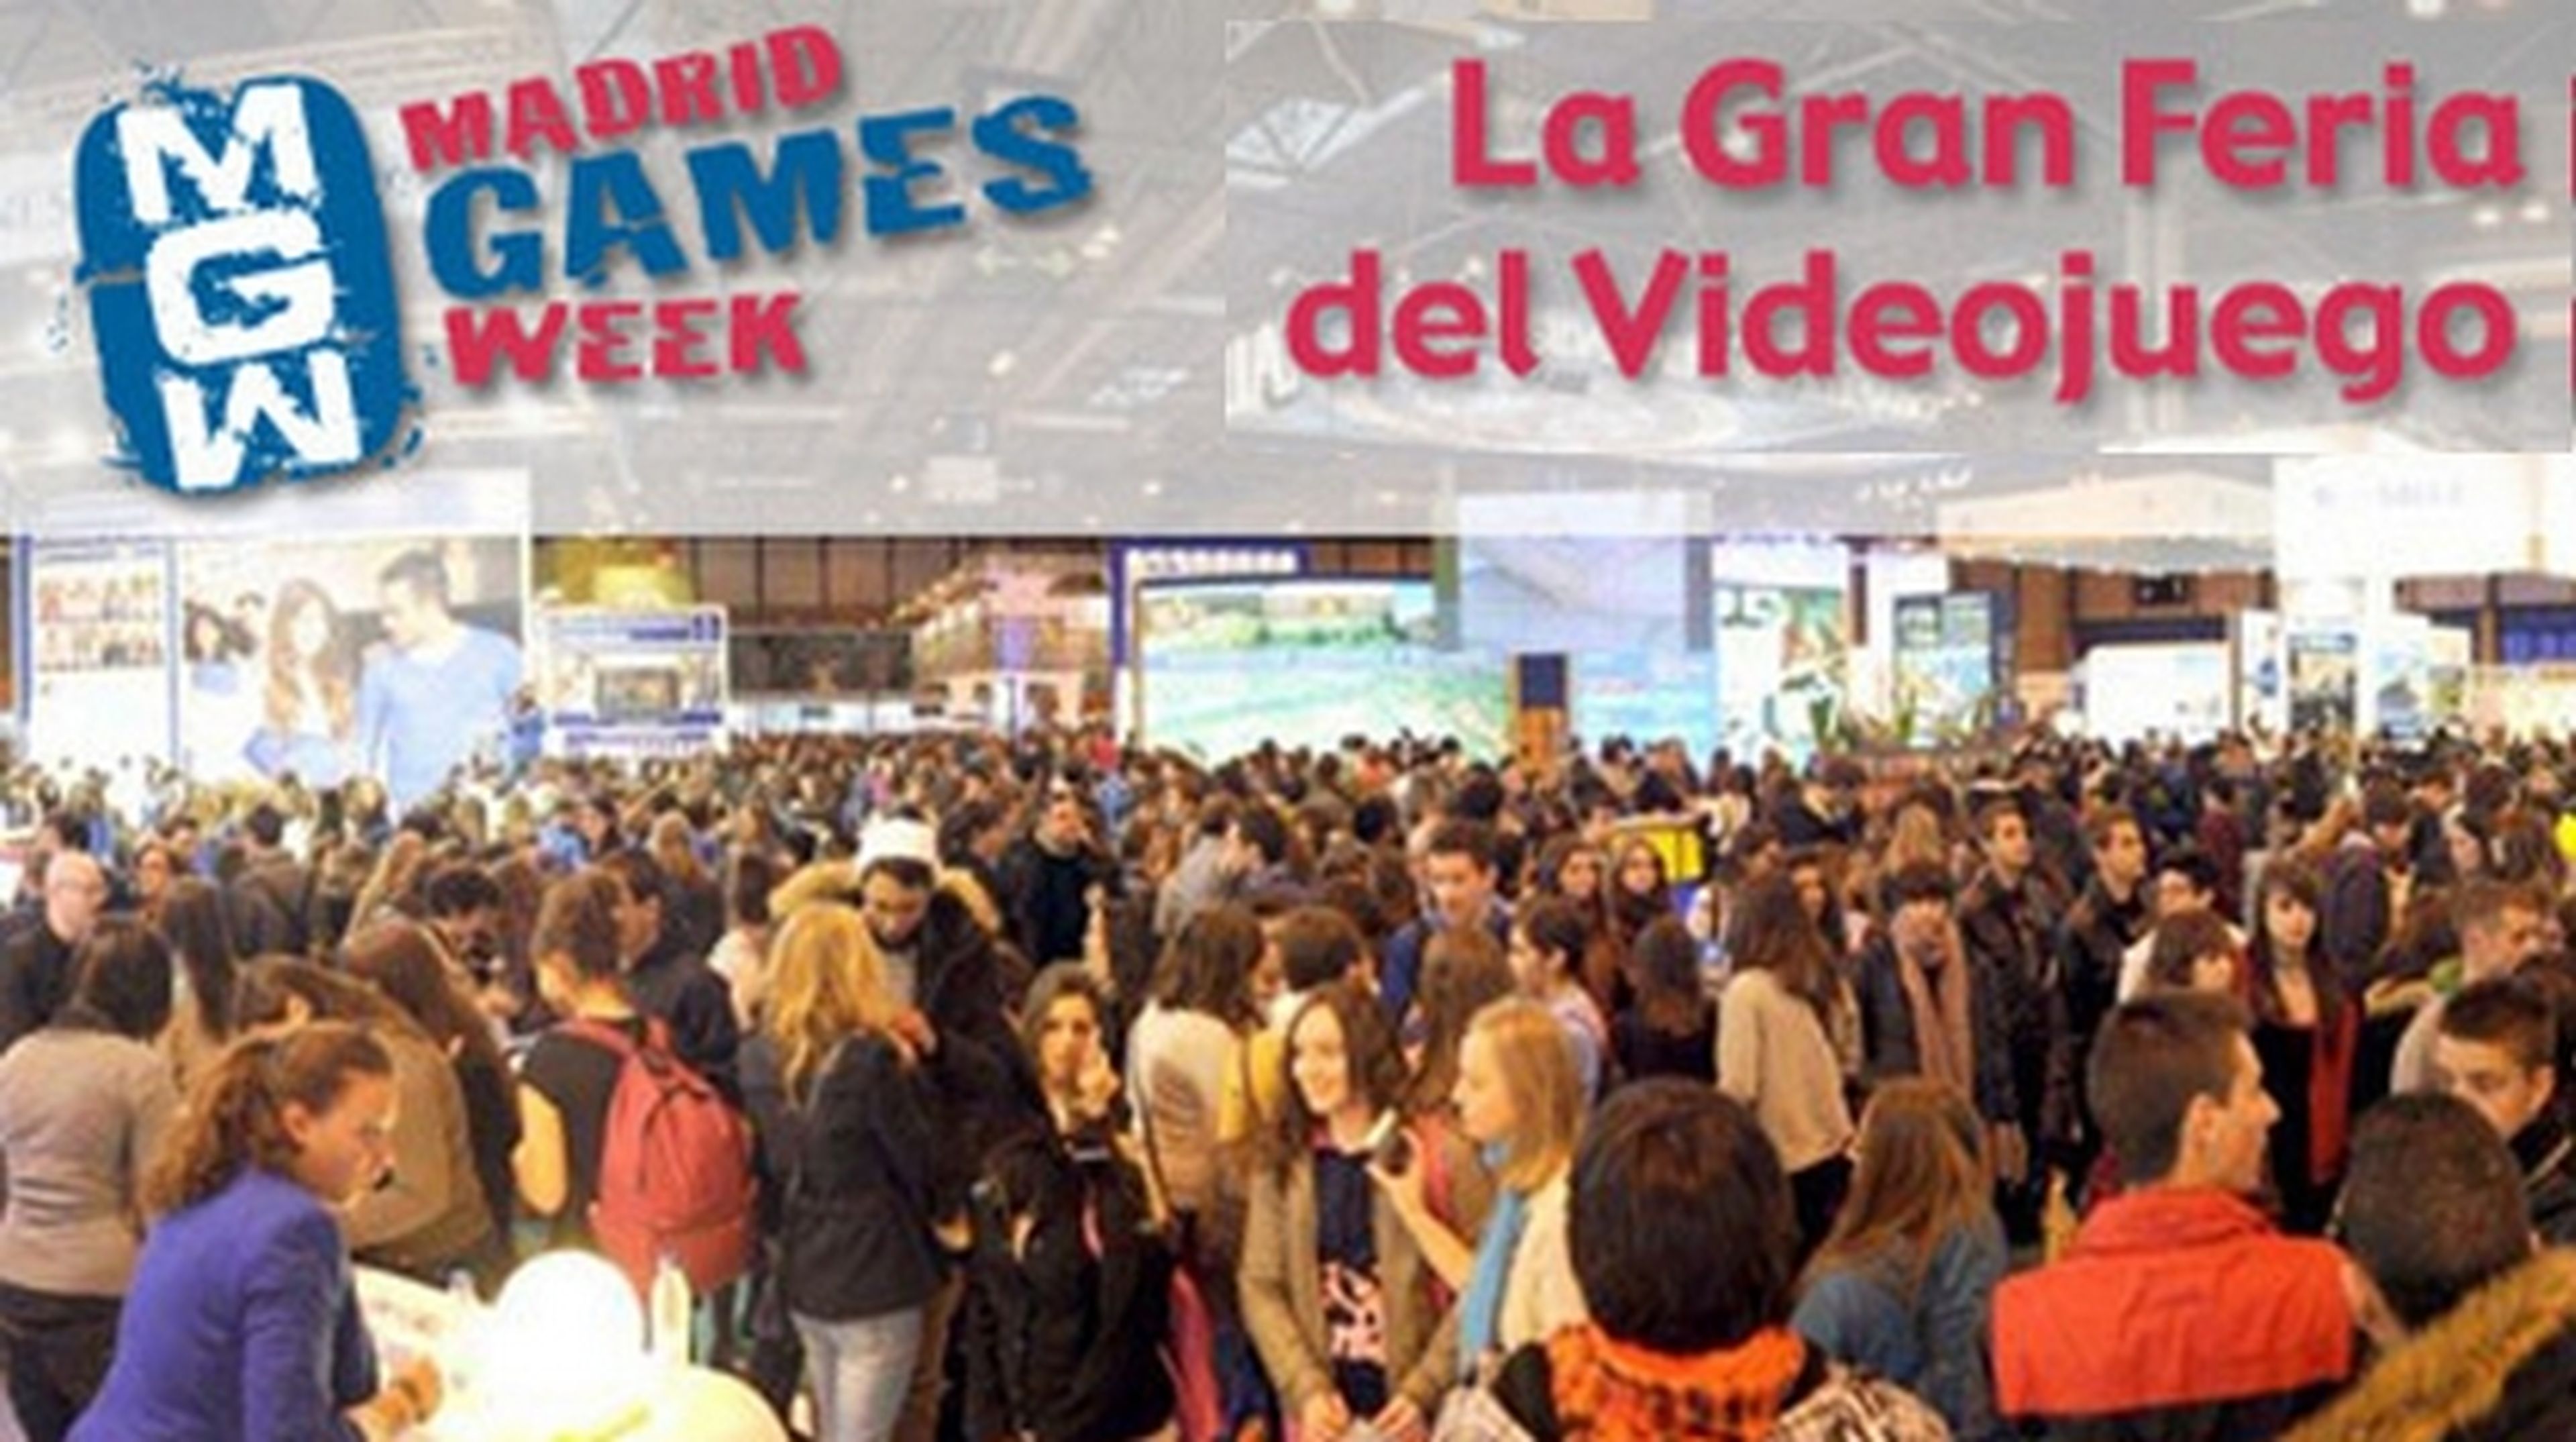 Madrid Games Week, se inaugura la Gran Feria del Videojuego